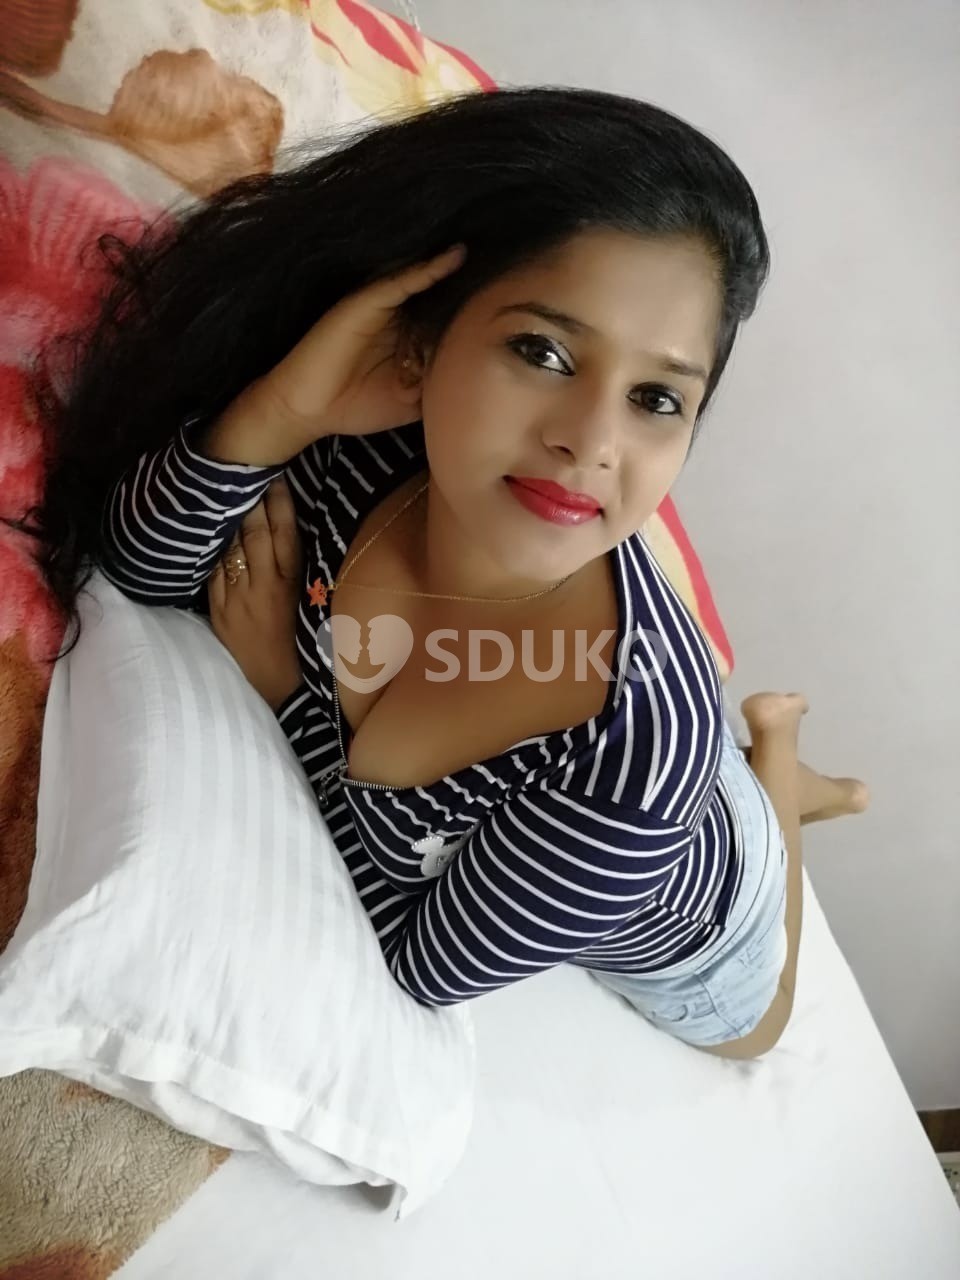 Manipuri call girl 24 hr sarvice available young girl💃 bhabhi available...,,,,,💕👌🏻